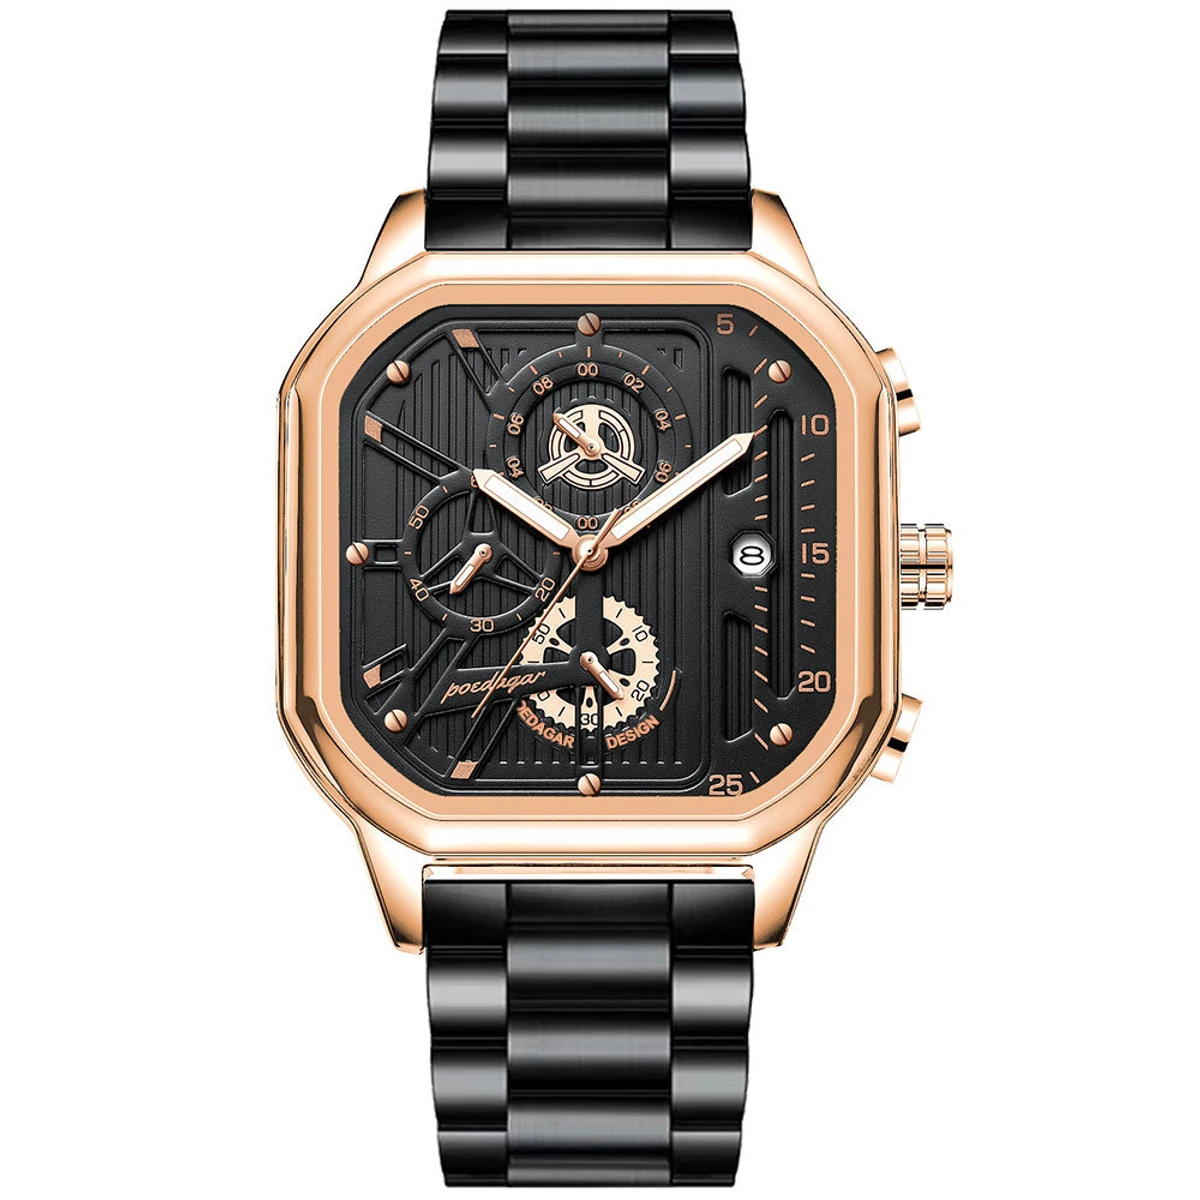 POEDAGAR 628 Luxury Casual Male Watch Fashion Chronograph Stainless Steel Waterproof